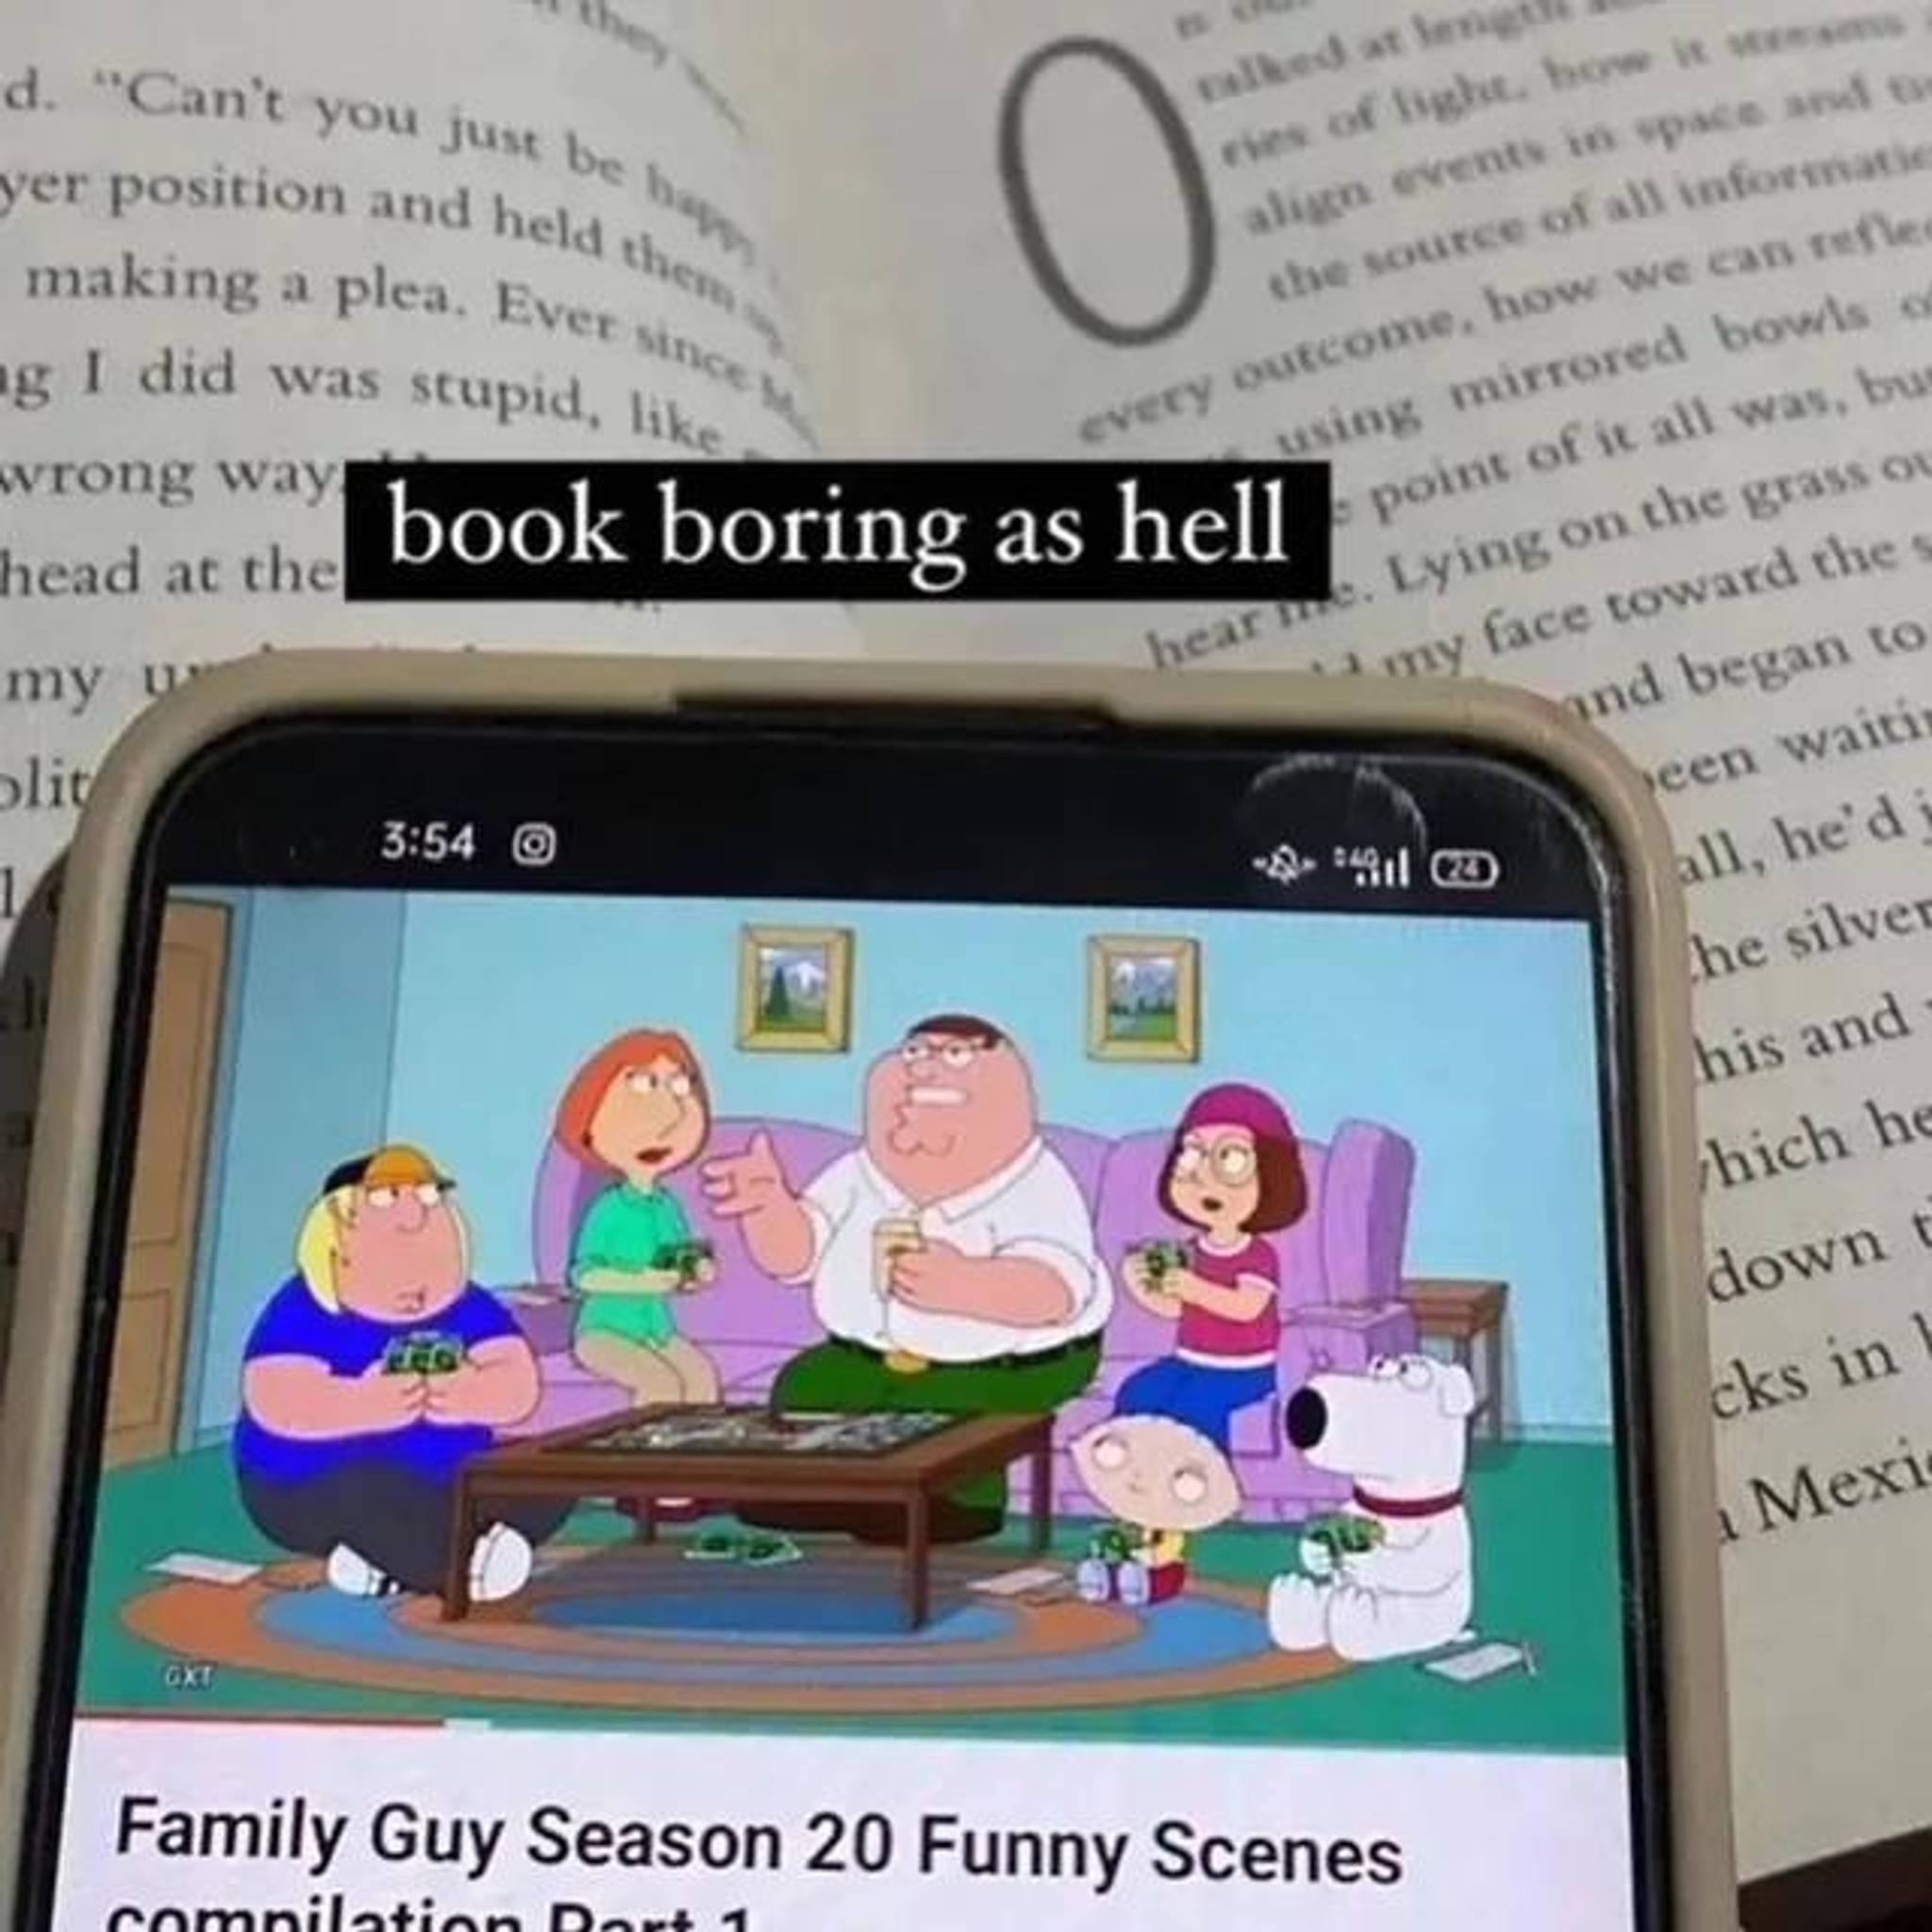 'Family Guy' multitasking meme points to overstimulation